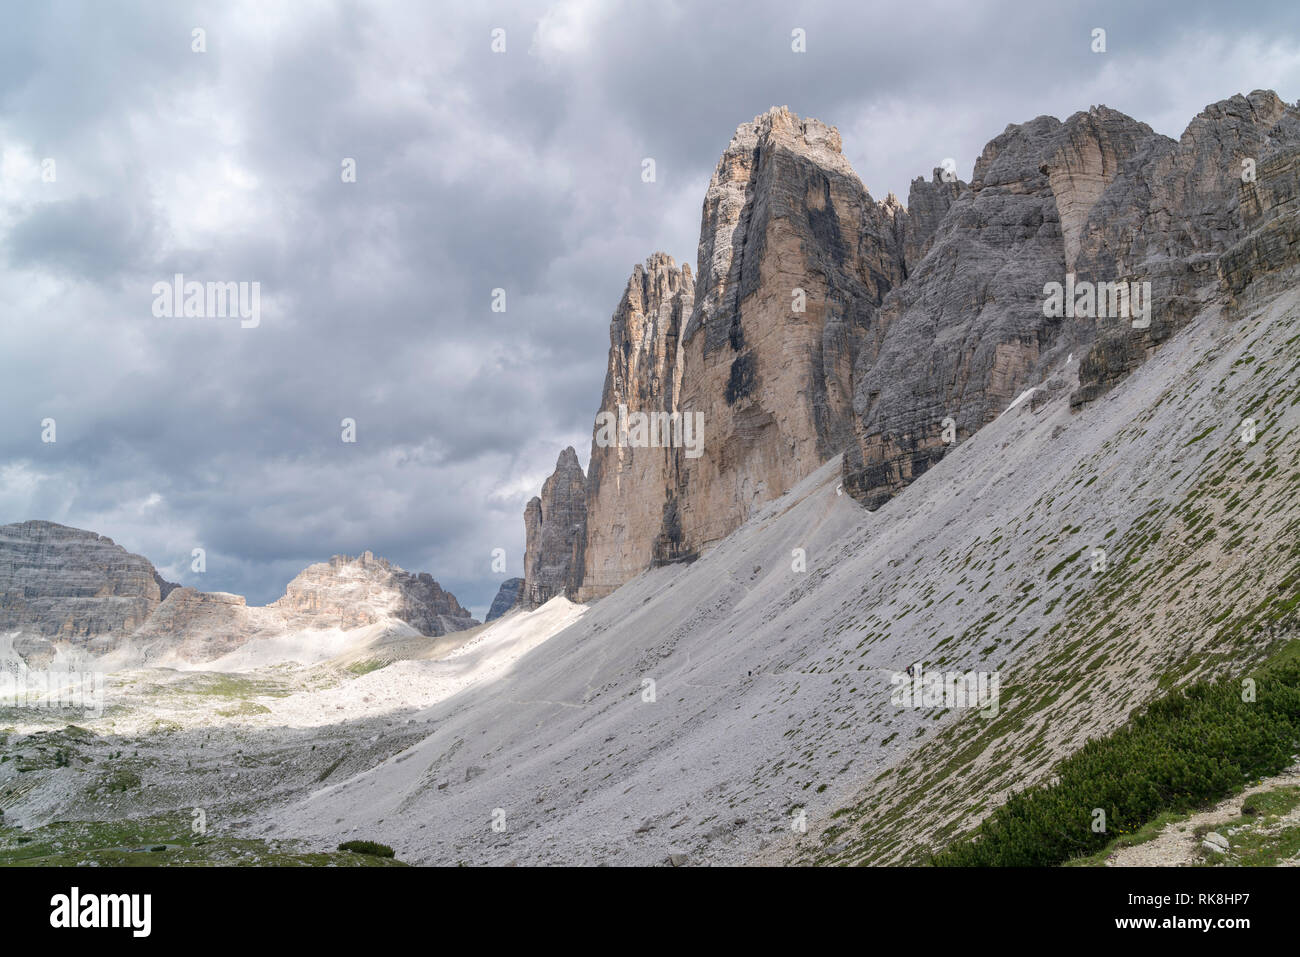 The Three Peaks of Lavaredo from a western point of view. Sesto Dolomites, Trentino Alto Adige, Italy. Stock Photo